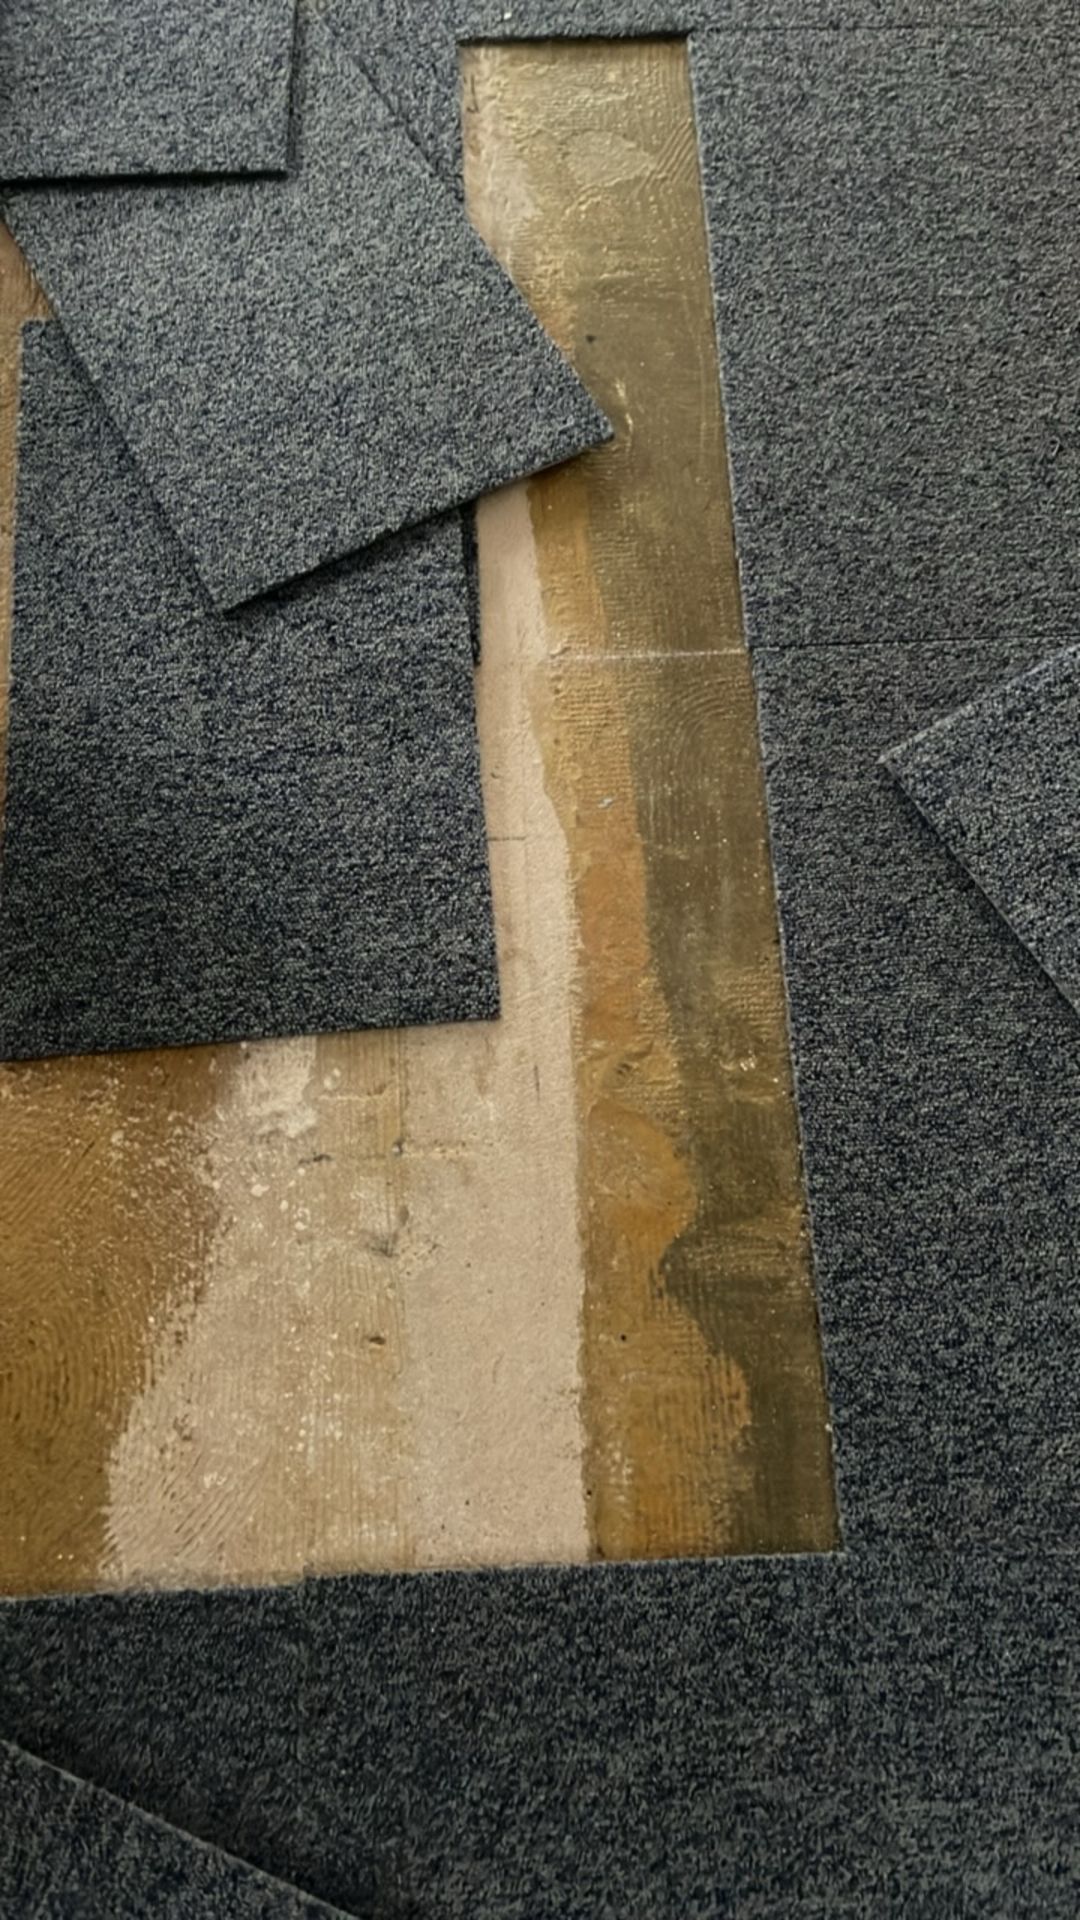 200SqMtr Of Blue Carpet Tiles - Image 3 of 3